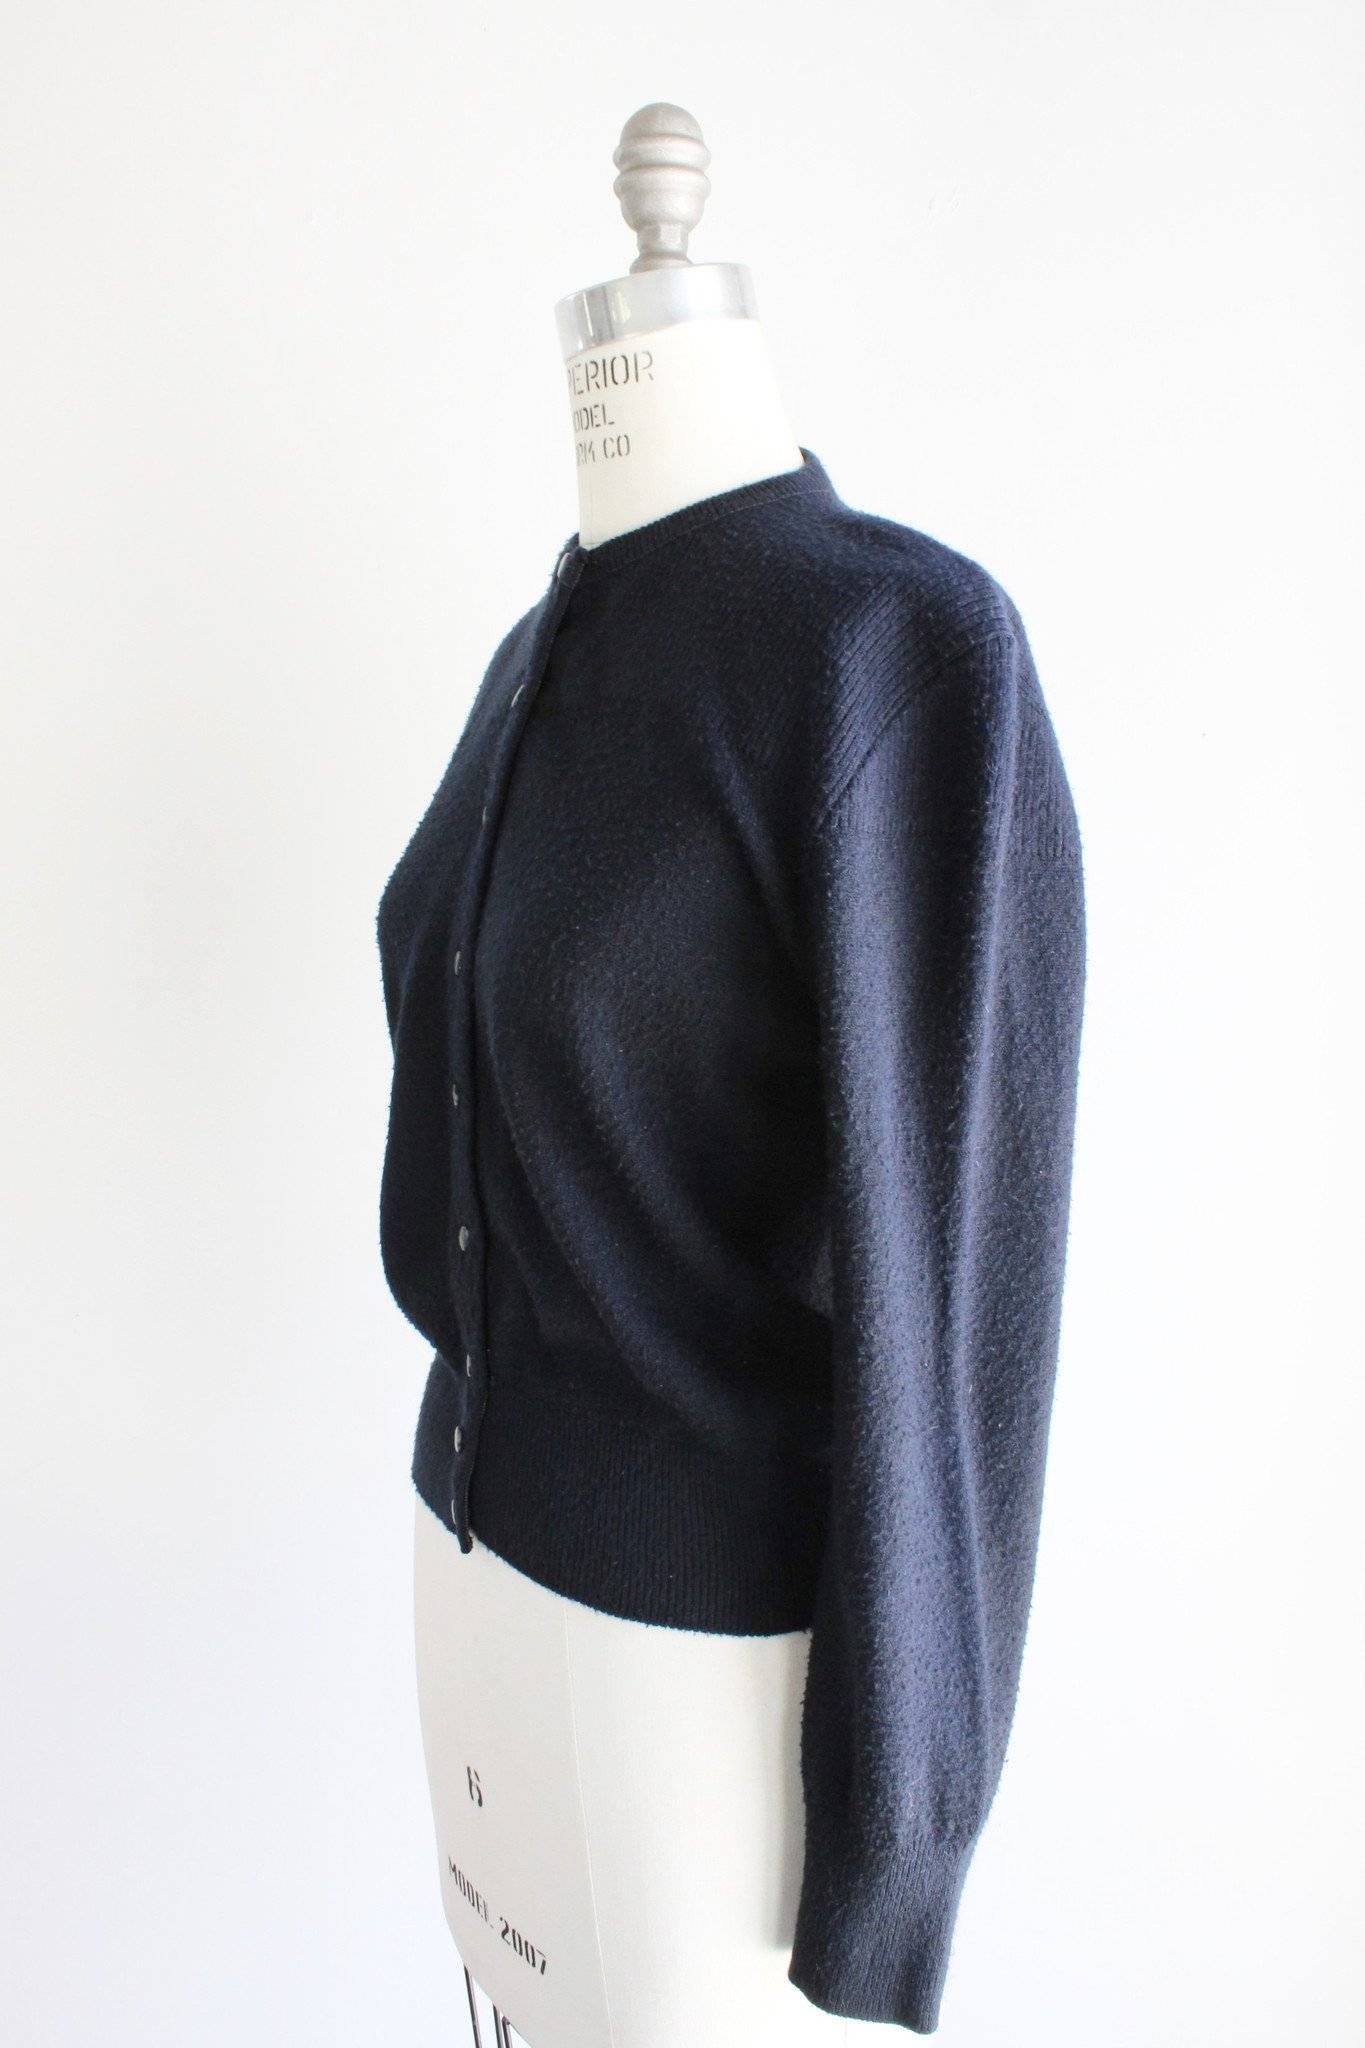 Vintage 1940s Black Ribbed Cardigan Sweater-The Black Velvet Emporium-1940s,40s,button front,cardigan,classic,fashion,ribbed,style,sweater,Vintage,Vintage Clothing